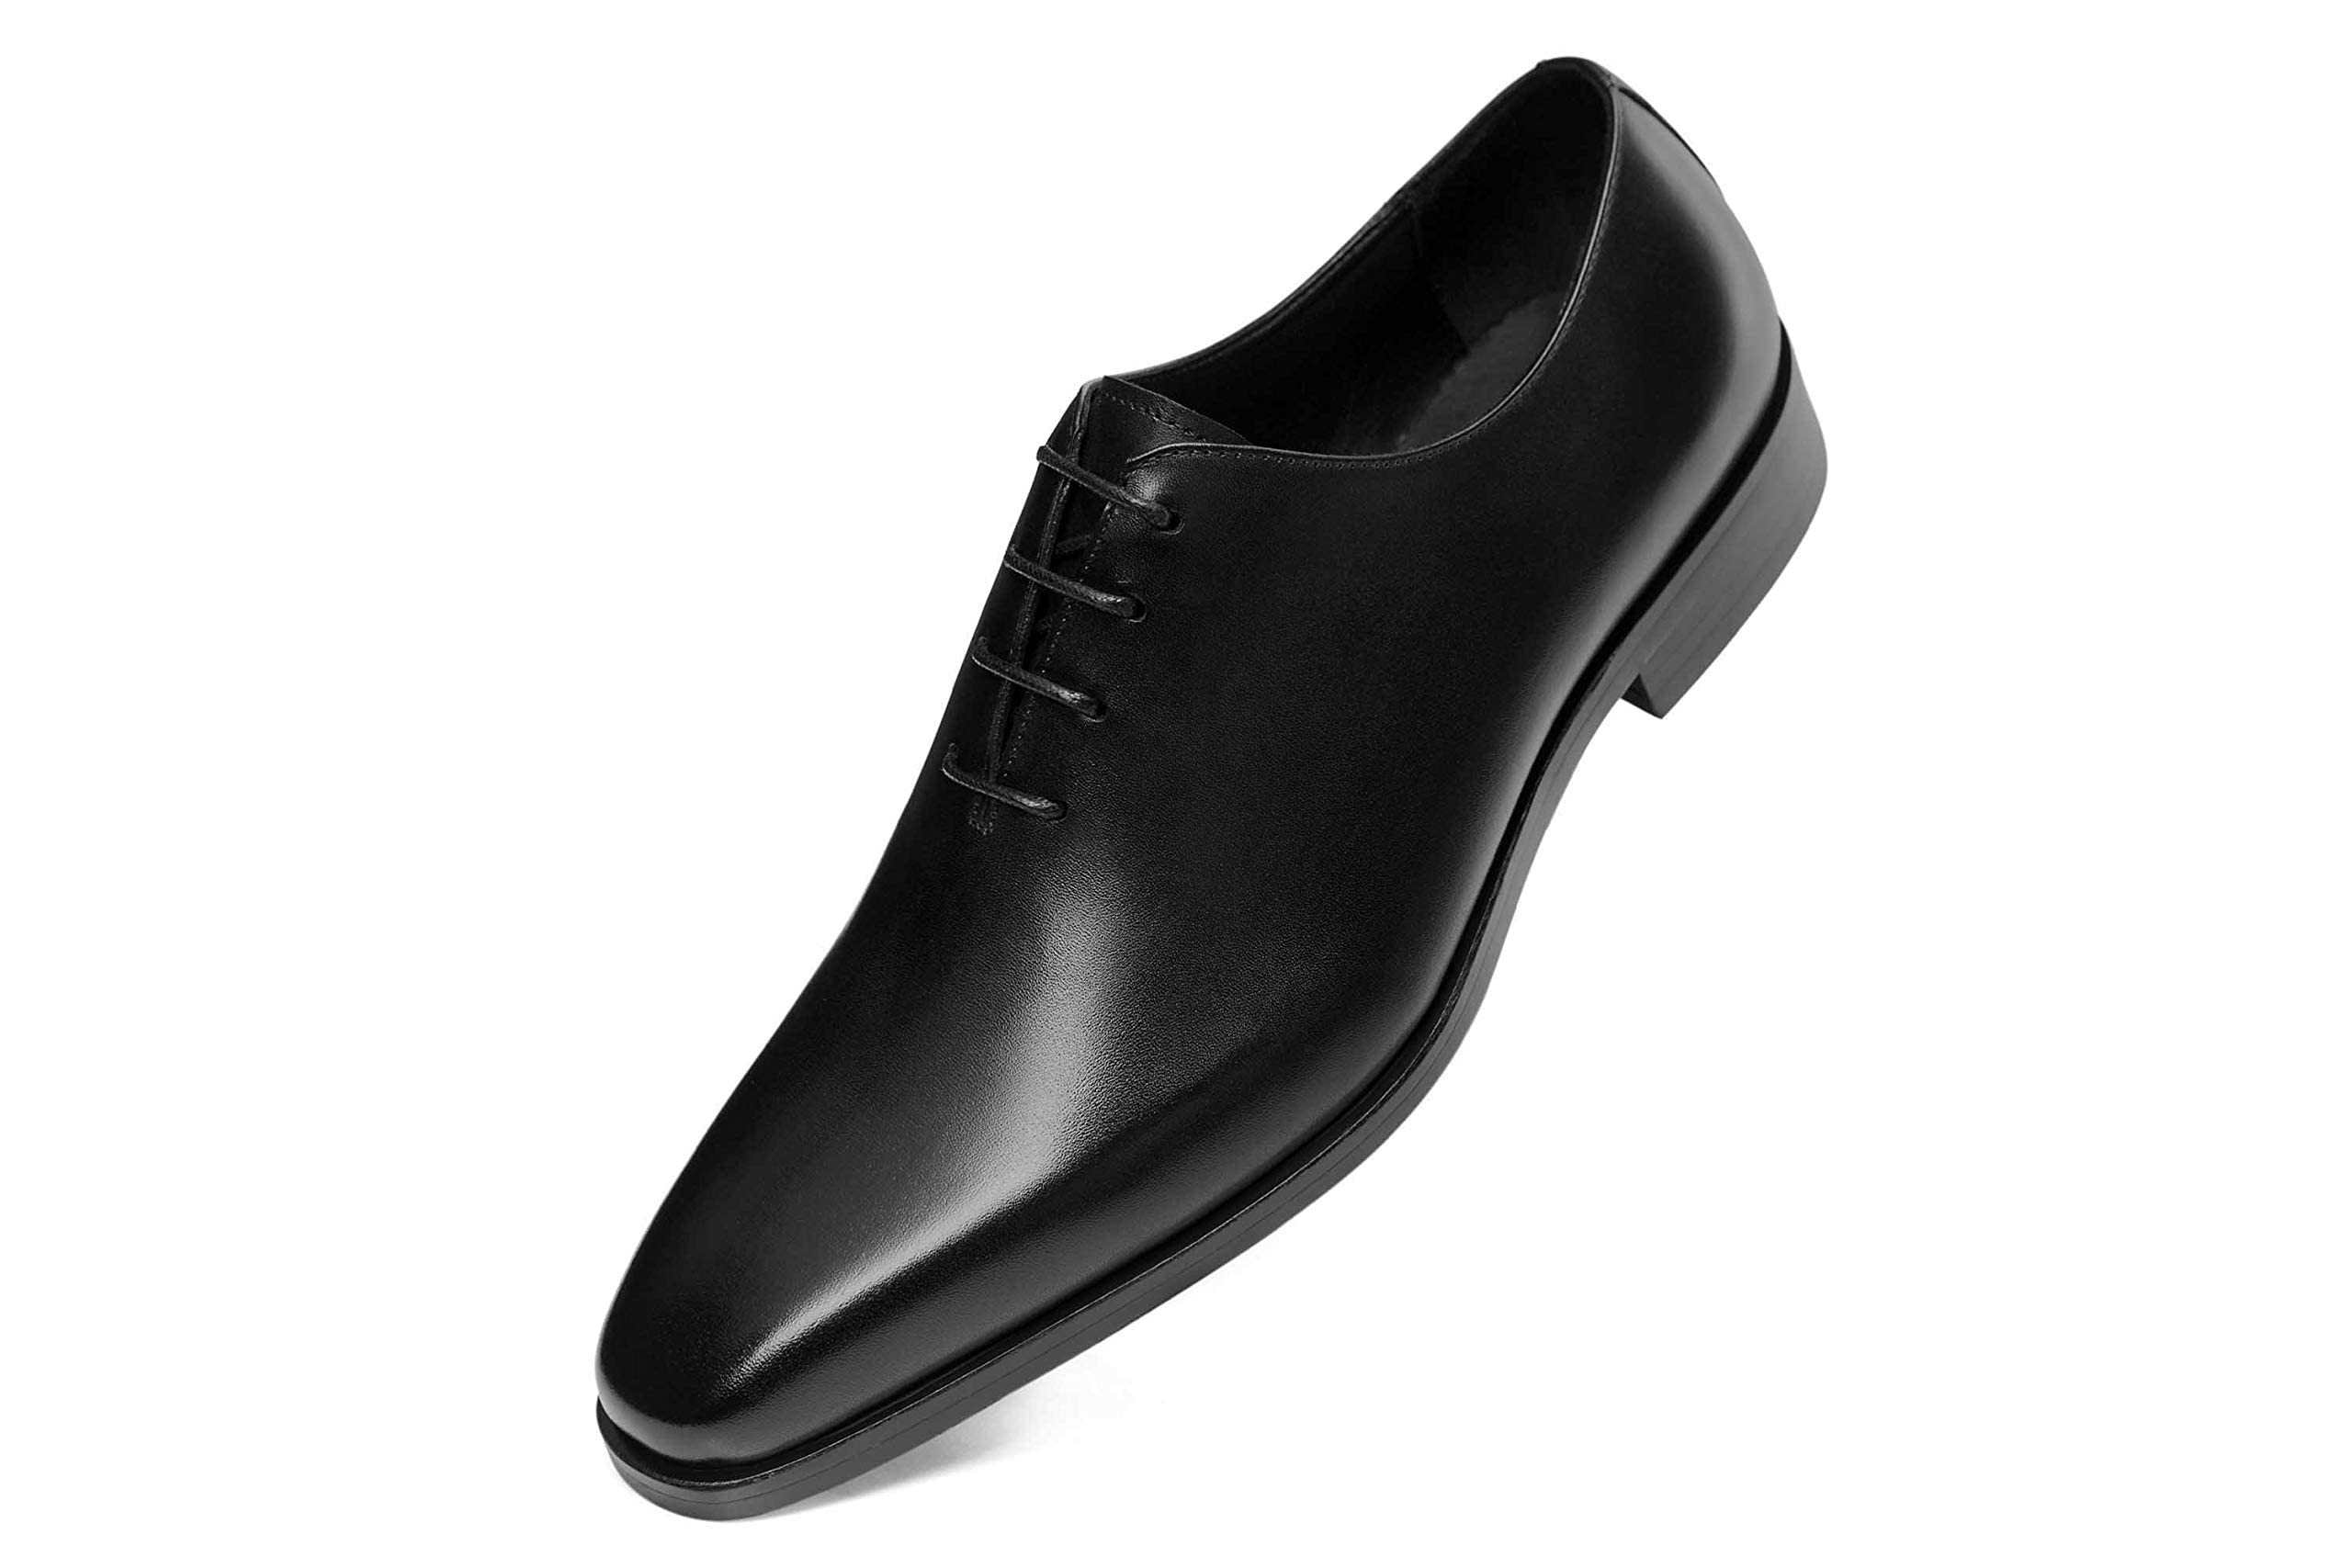 Mua Men's Dress Shoes Oxford Formal Leather Shoes for Men trên Amazon Mỹ  chính hãng 2023 | Giaonhan247